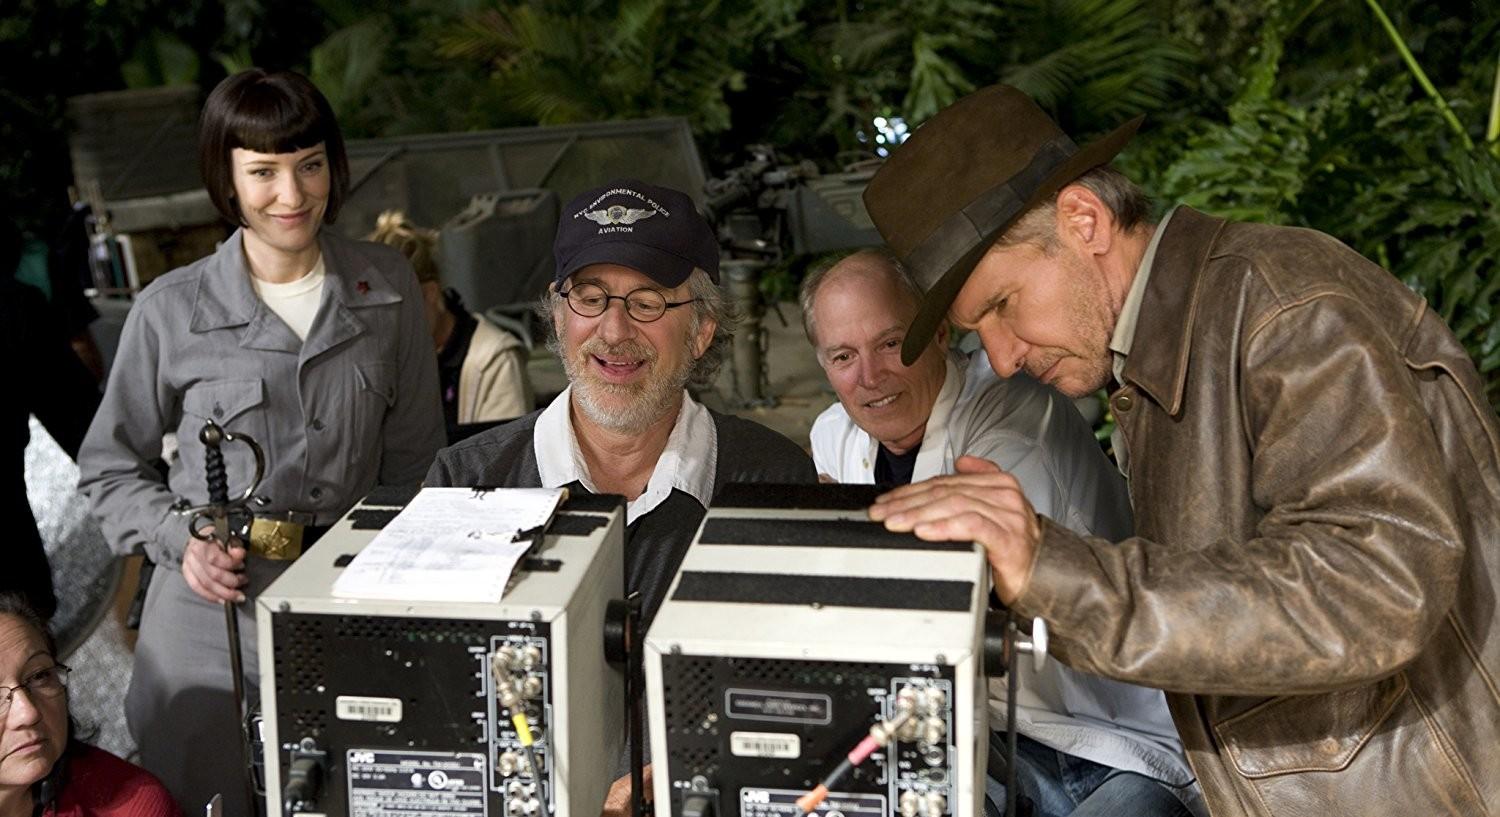 Here’s Steven Spielberg’s Next Big Project After Indiana Jones 5 | Best Of Comic Books